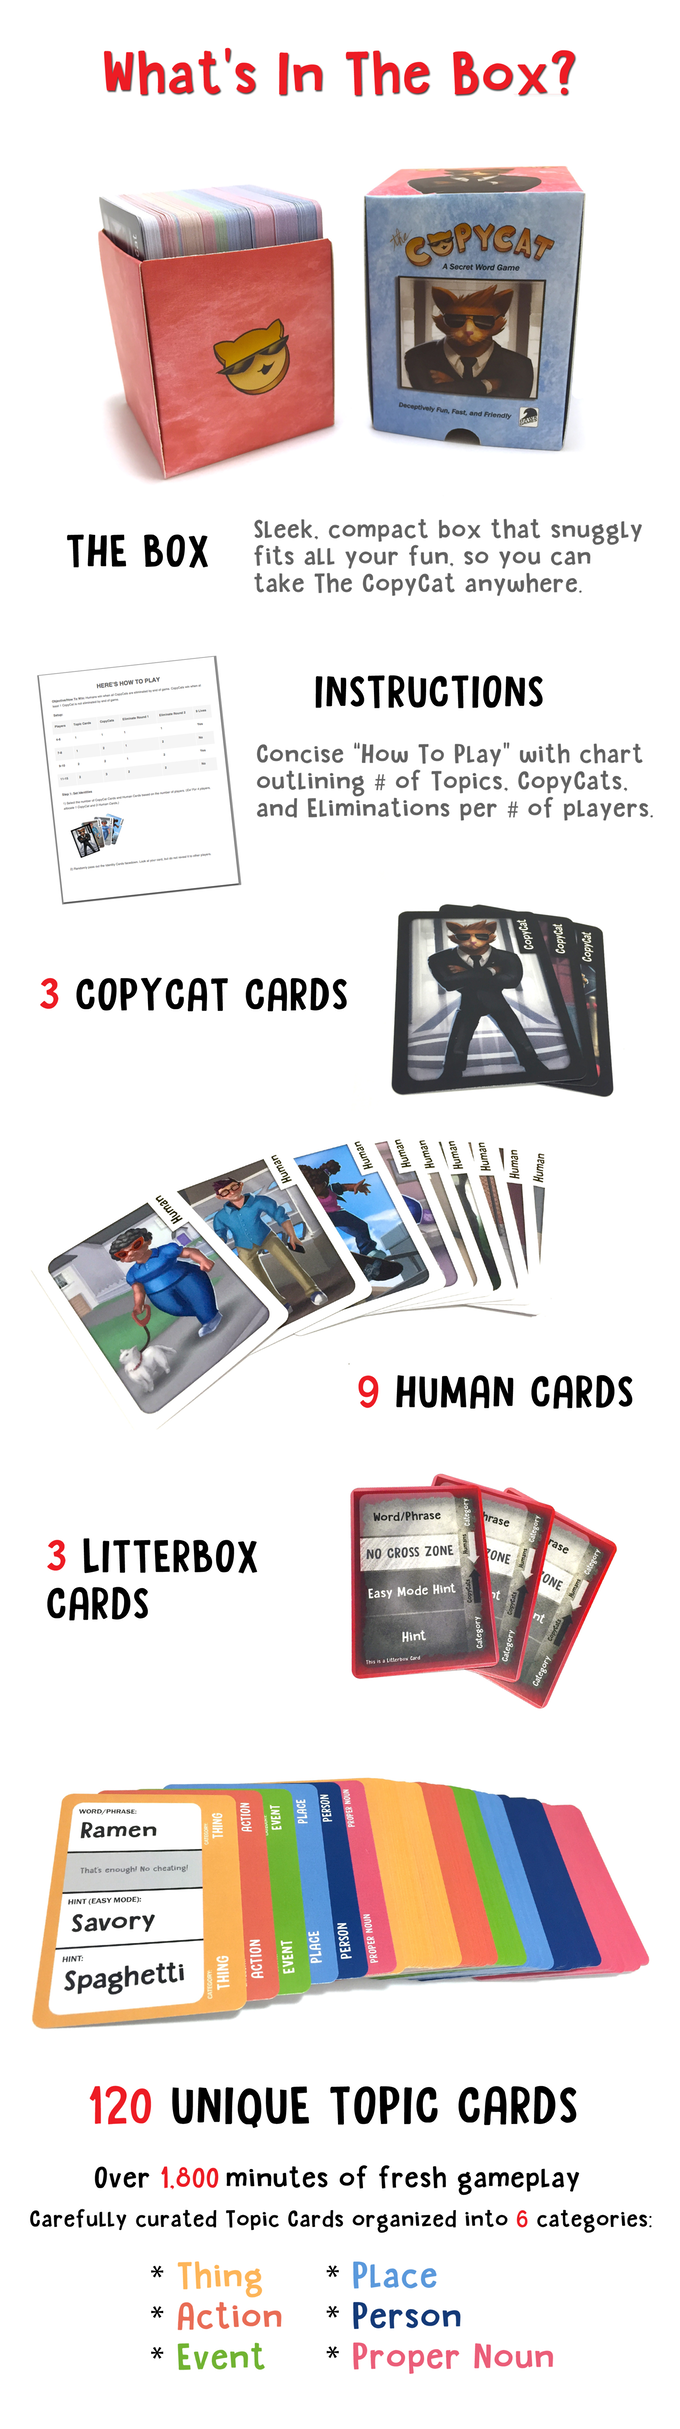 The CopyCat Cards